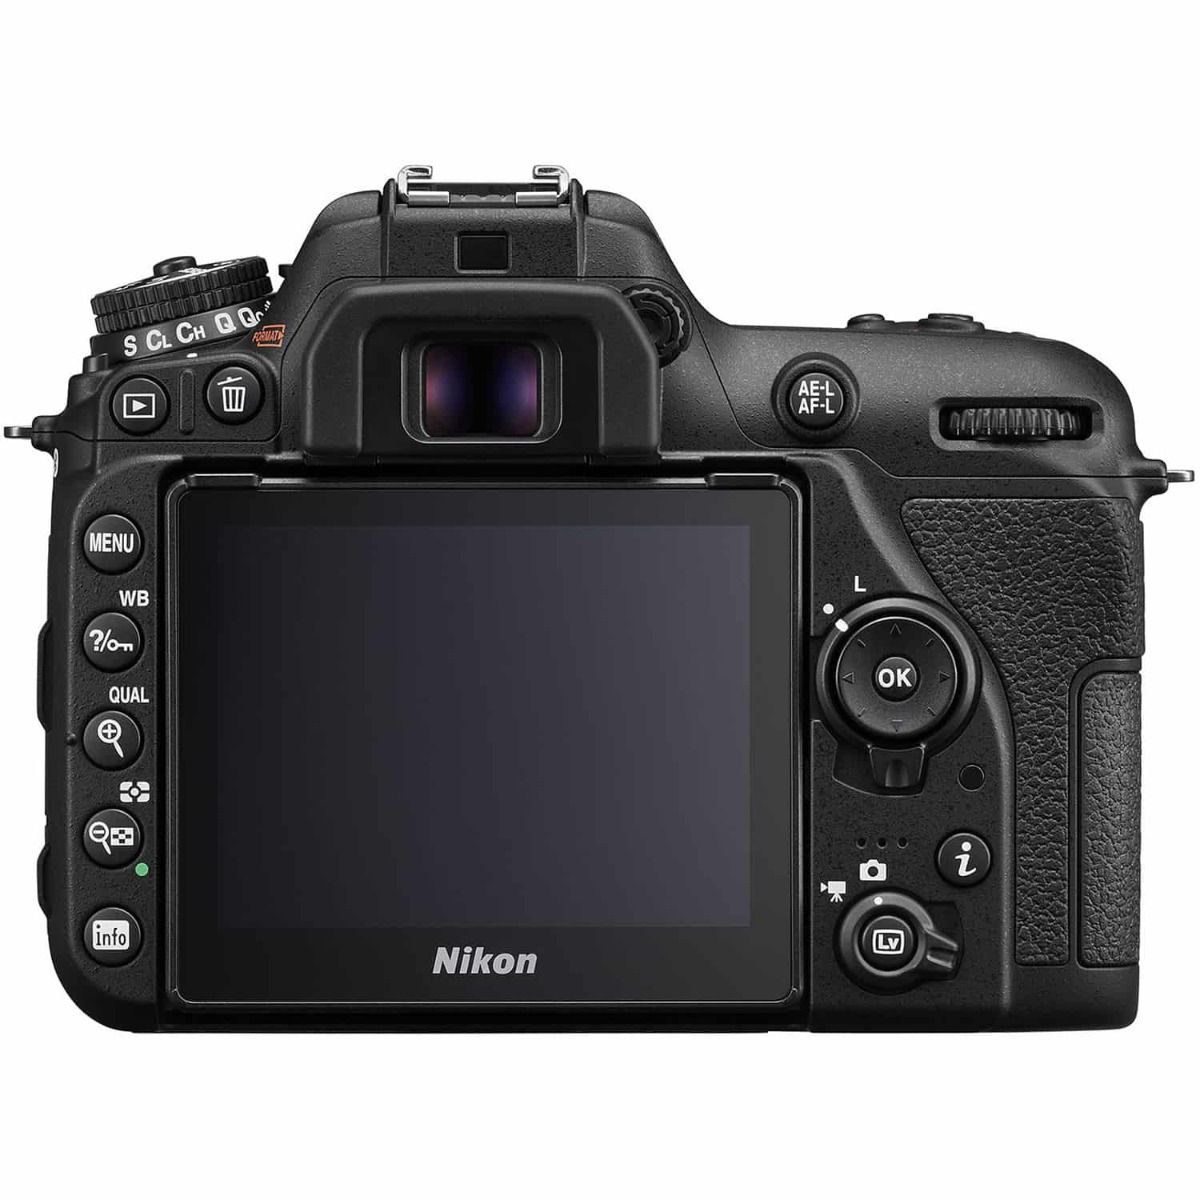 Nikon D7500 DSLR Camera with 18-140mm VR Lens Kit